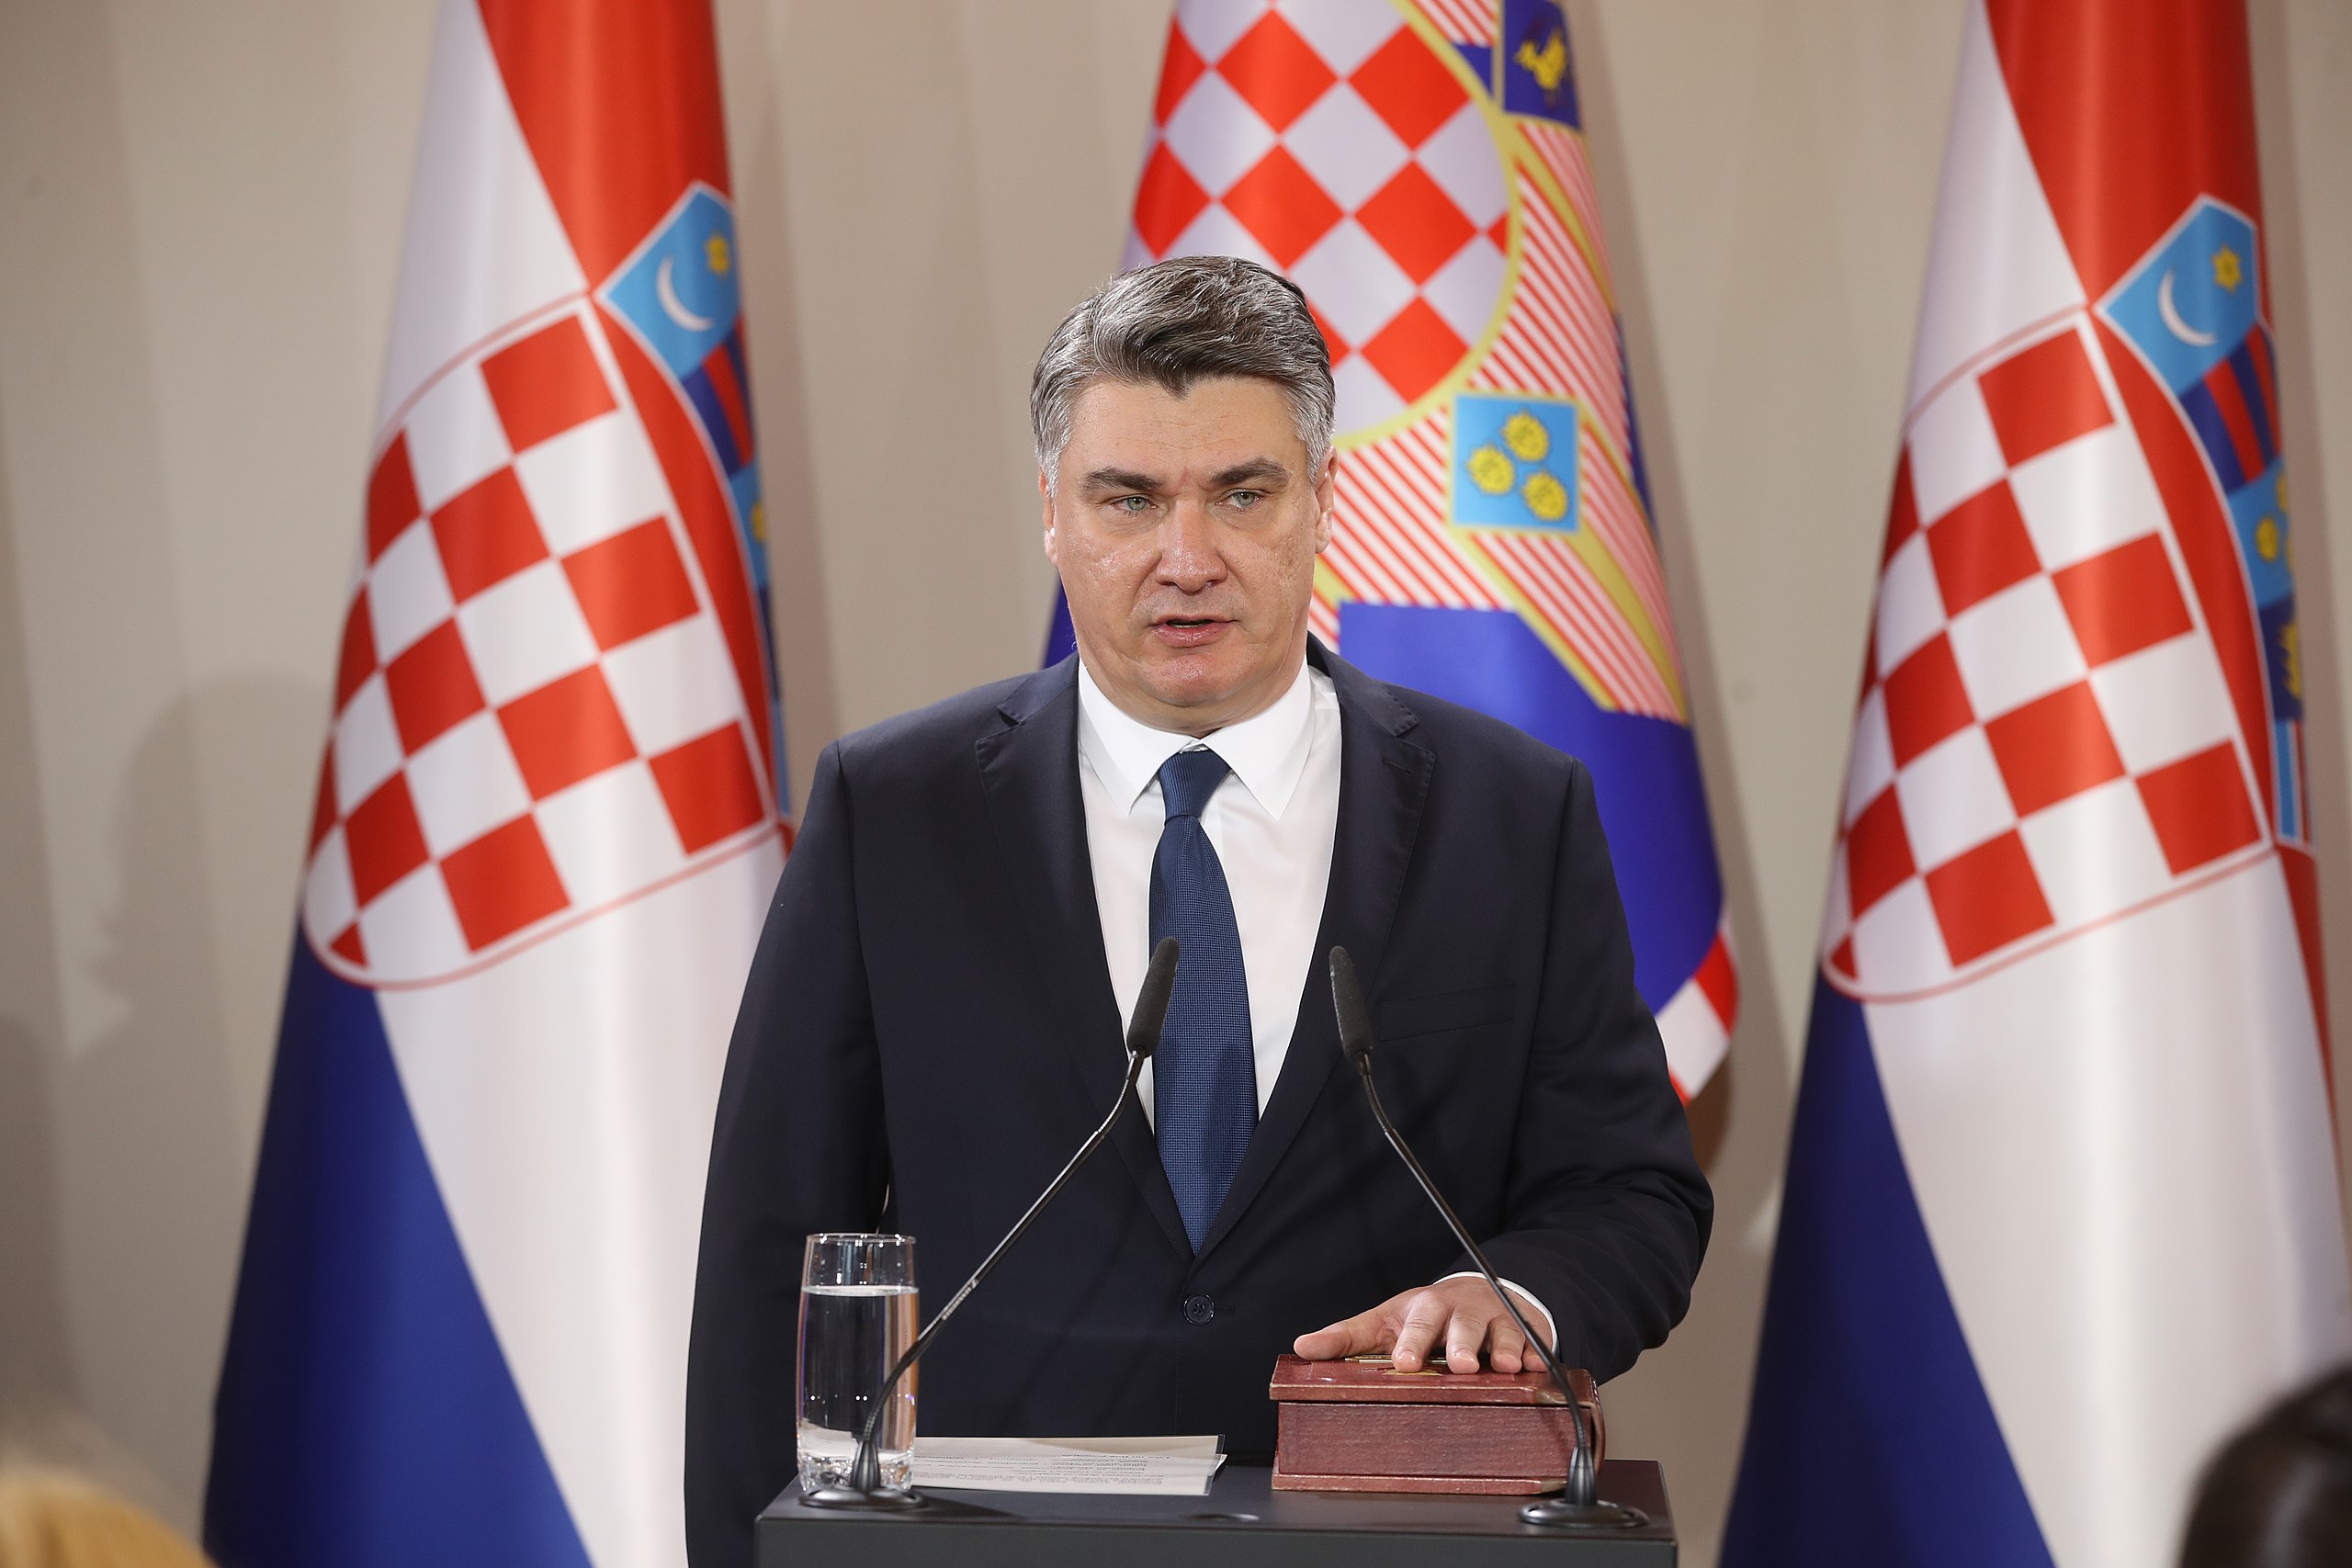 Croatian President Zoran Milanović